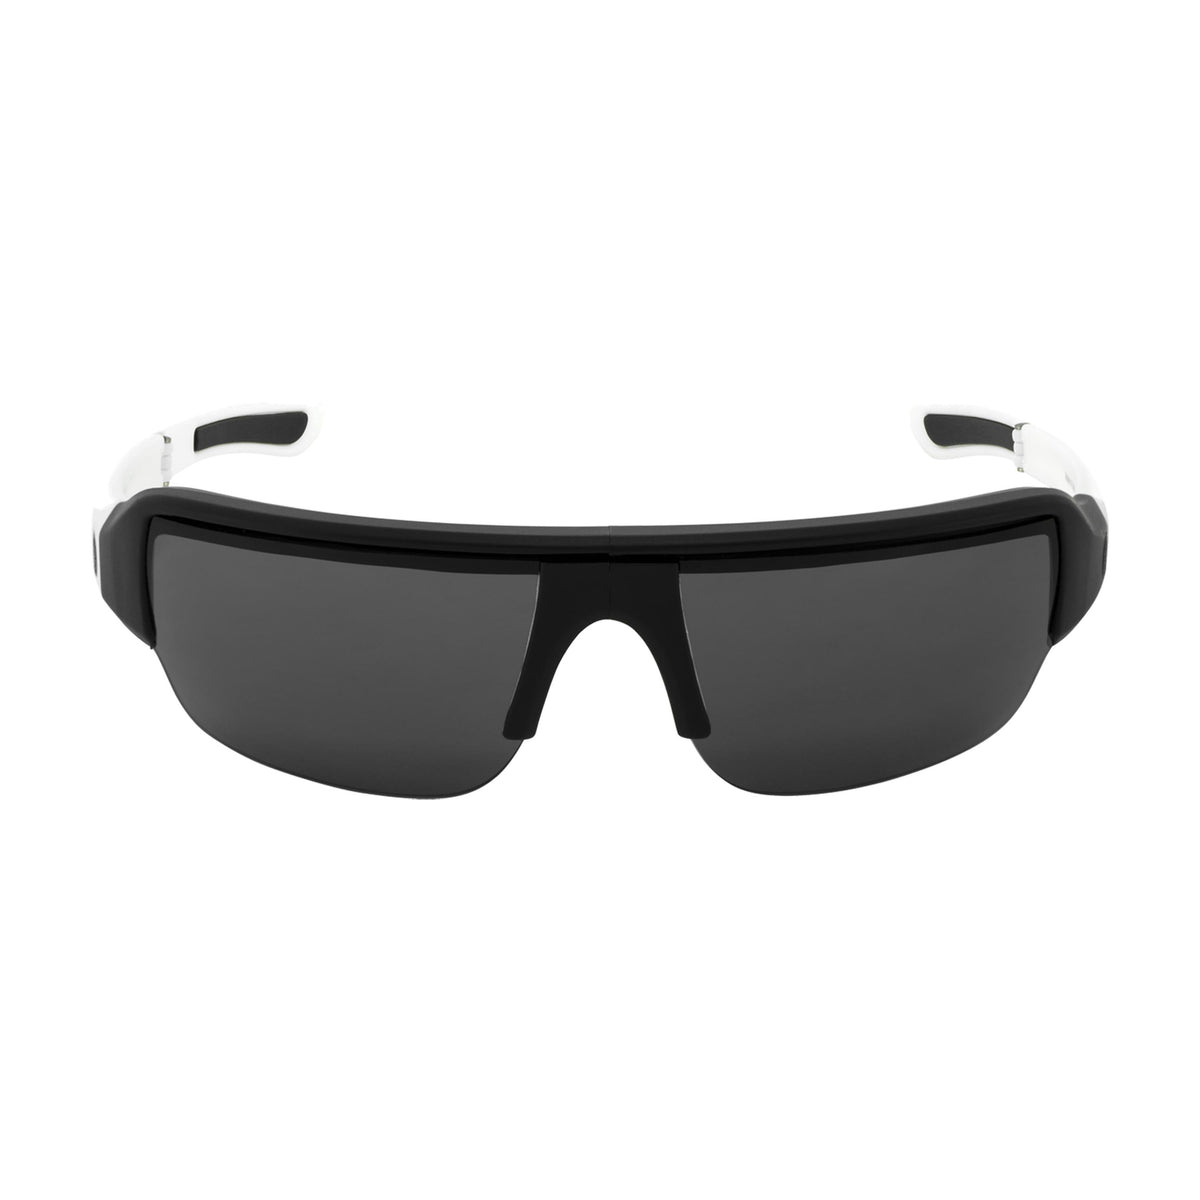 Popticals, Premium Compact Sunglasses, PopGun, 010010-WMGP, Polarized Sunglasses, Matte Black/White Frame, Gray Lenses, Front View